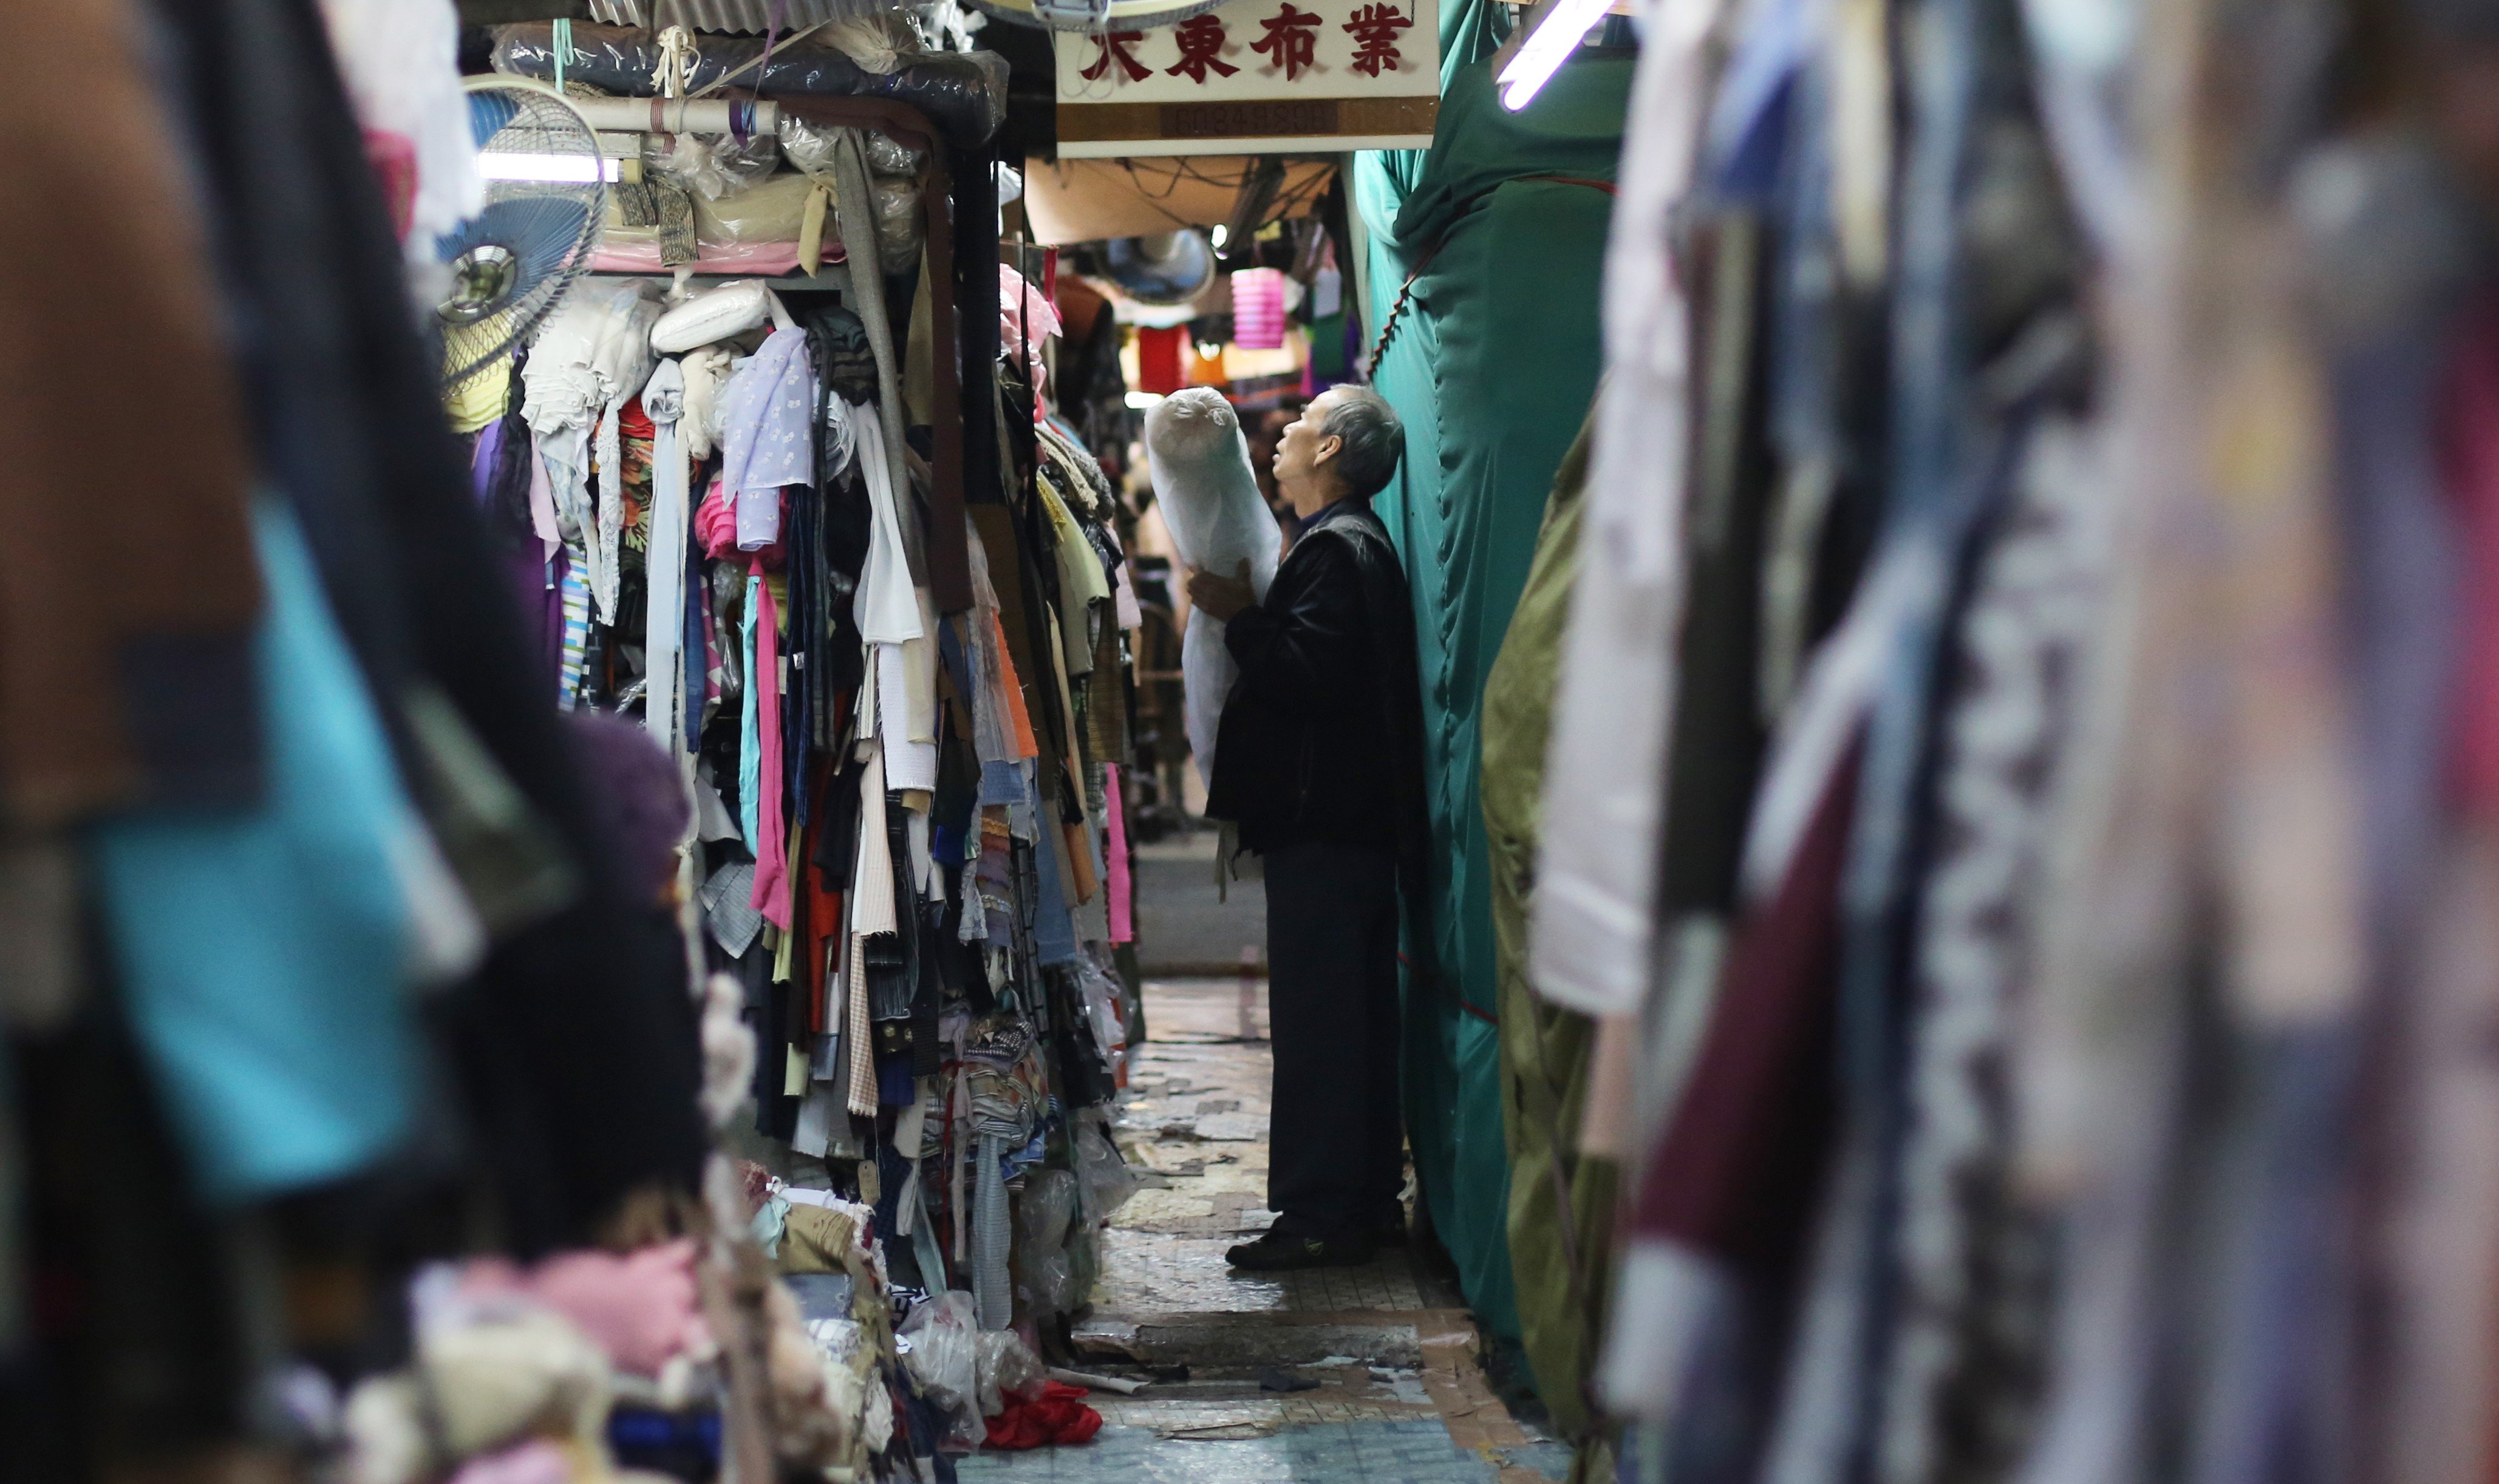 Fabric vendors and customers have long flocked to Hong Kong’s Sham Shui Po district. Photo: Sam Tsang